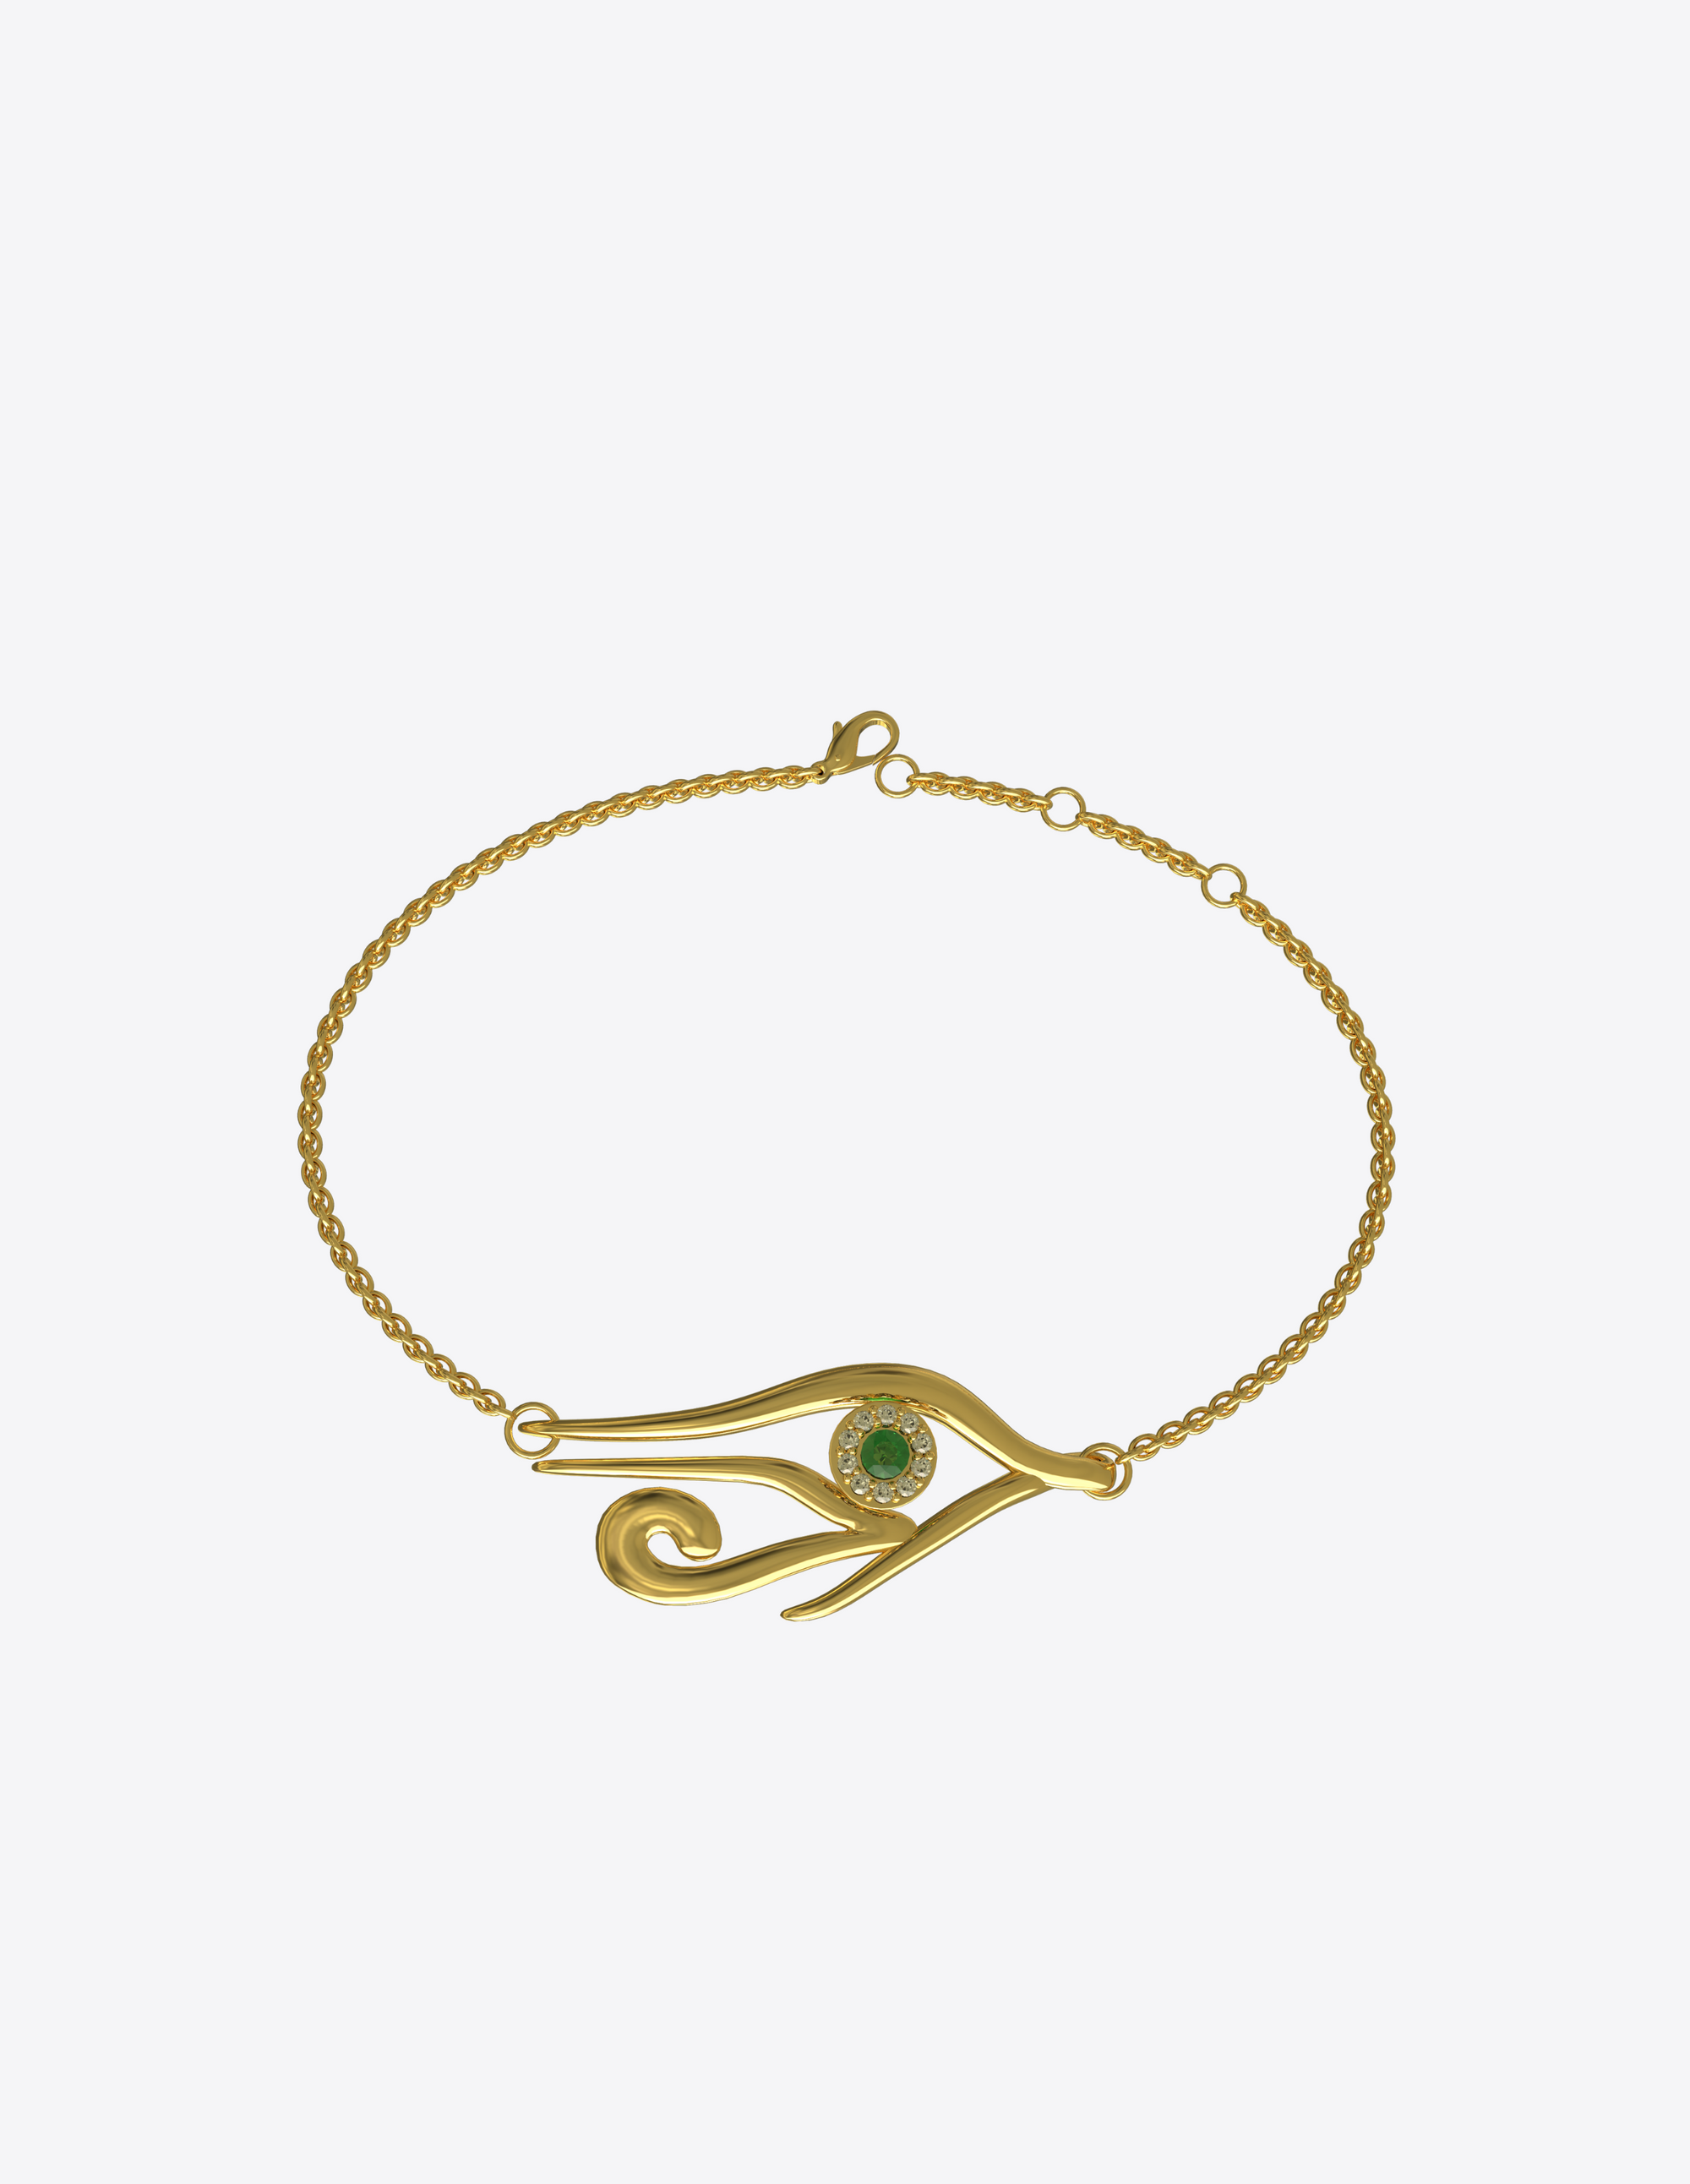 Heru (Horus) Bracelet in 18k Gold with Emerald & Diamonds